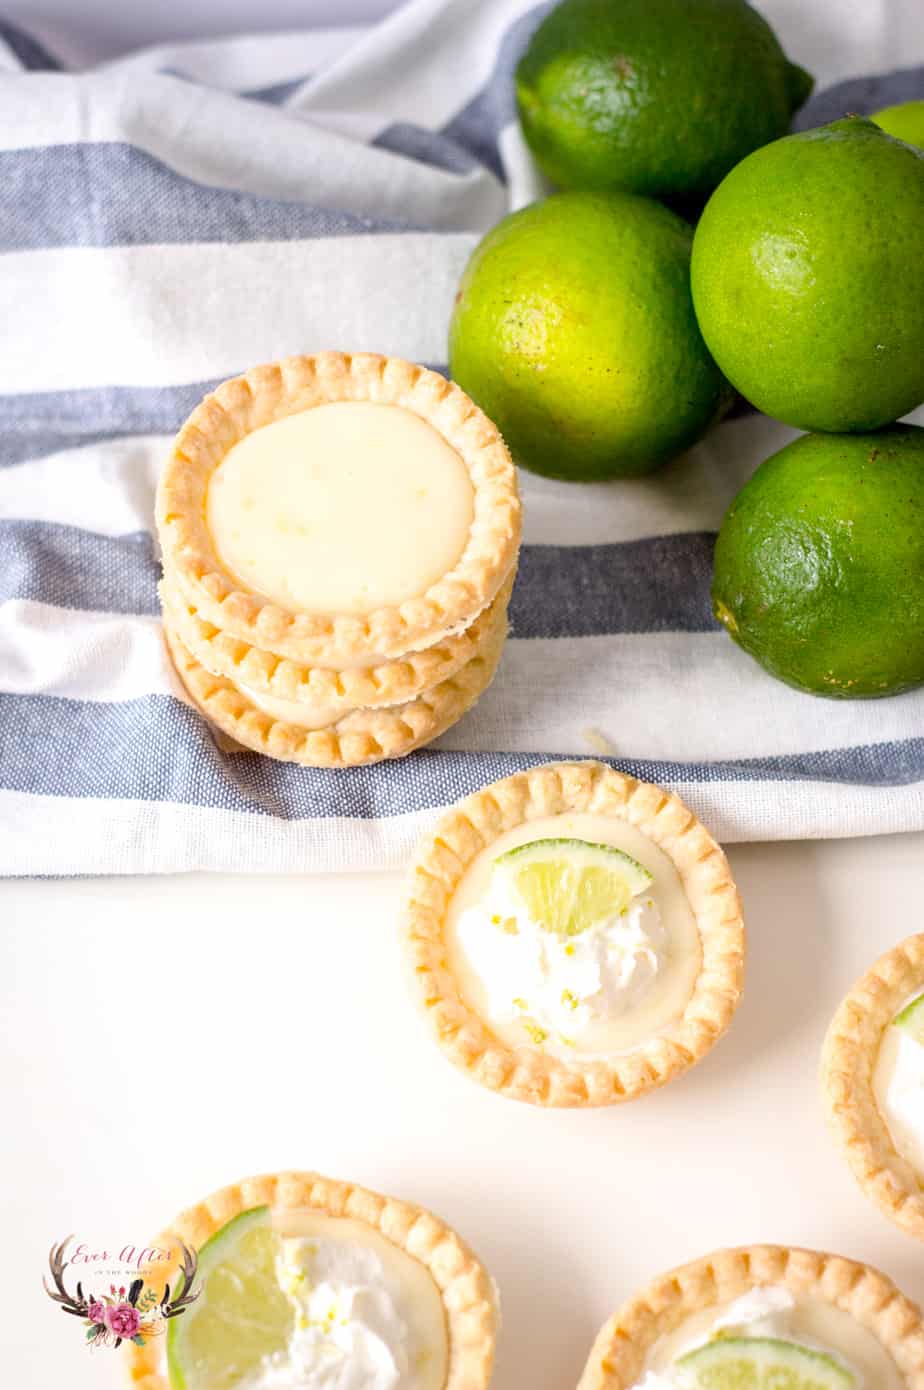 mini key lime pies | tarts